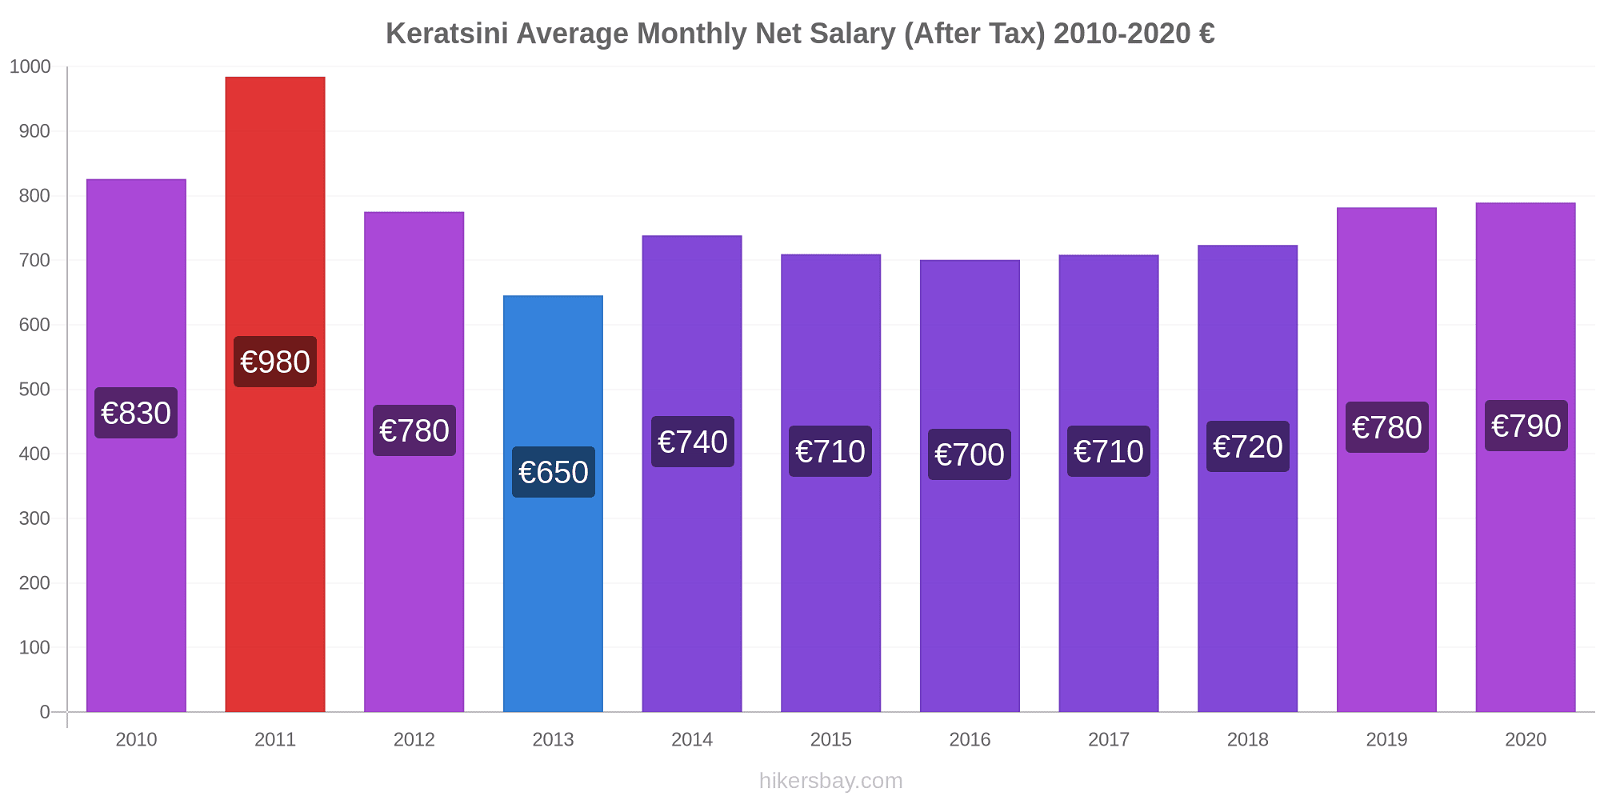 Keratsini price changes Average Monthly Net Salary (After Tax) hikersbay.com